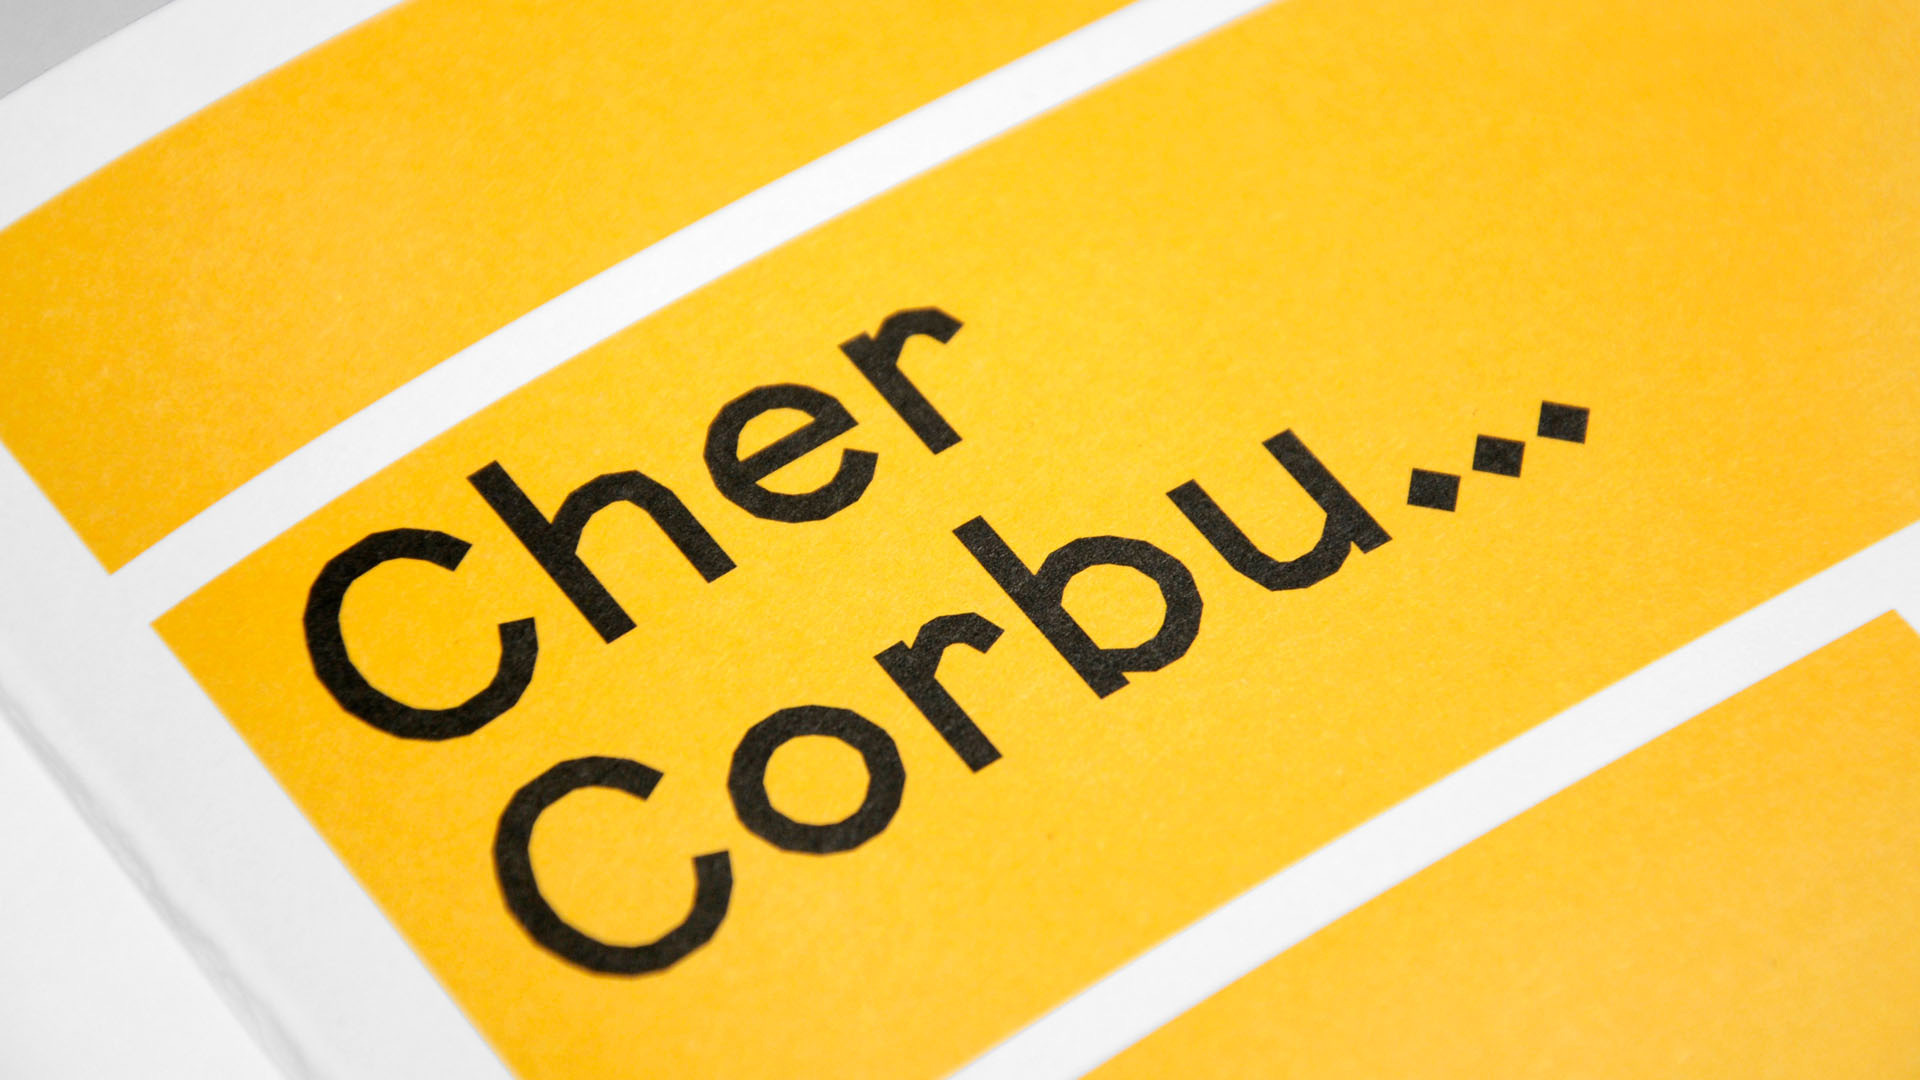 cher-corbu-bernard-chauveau-edition-plastac